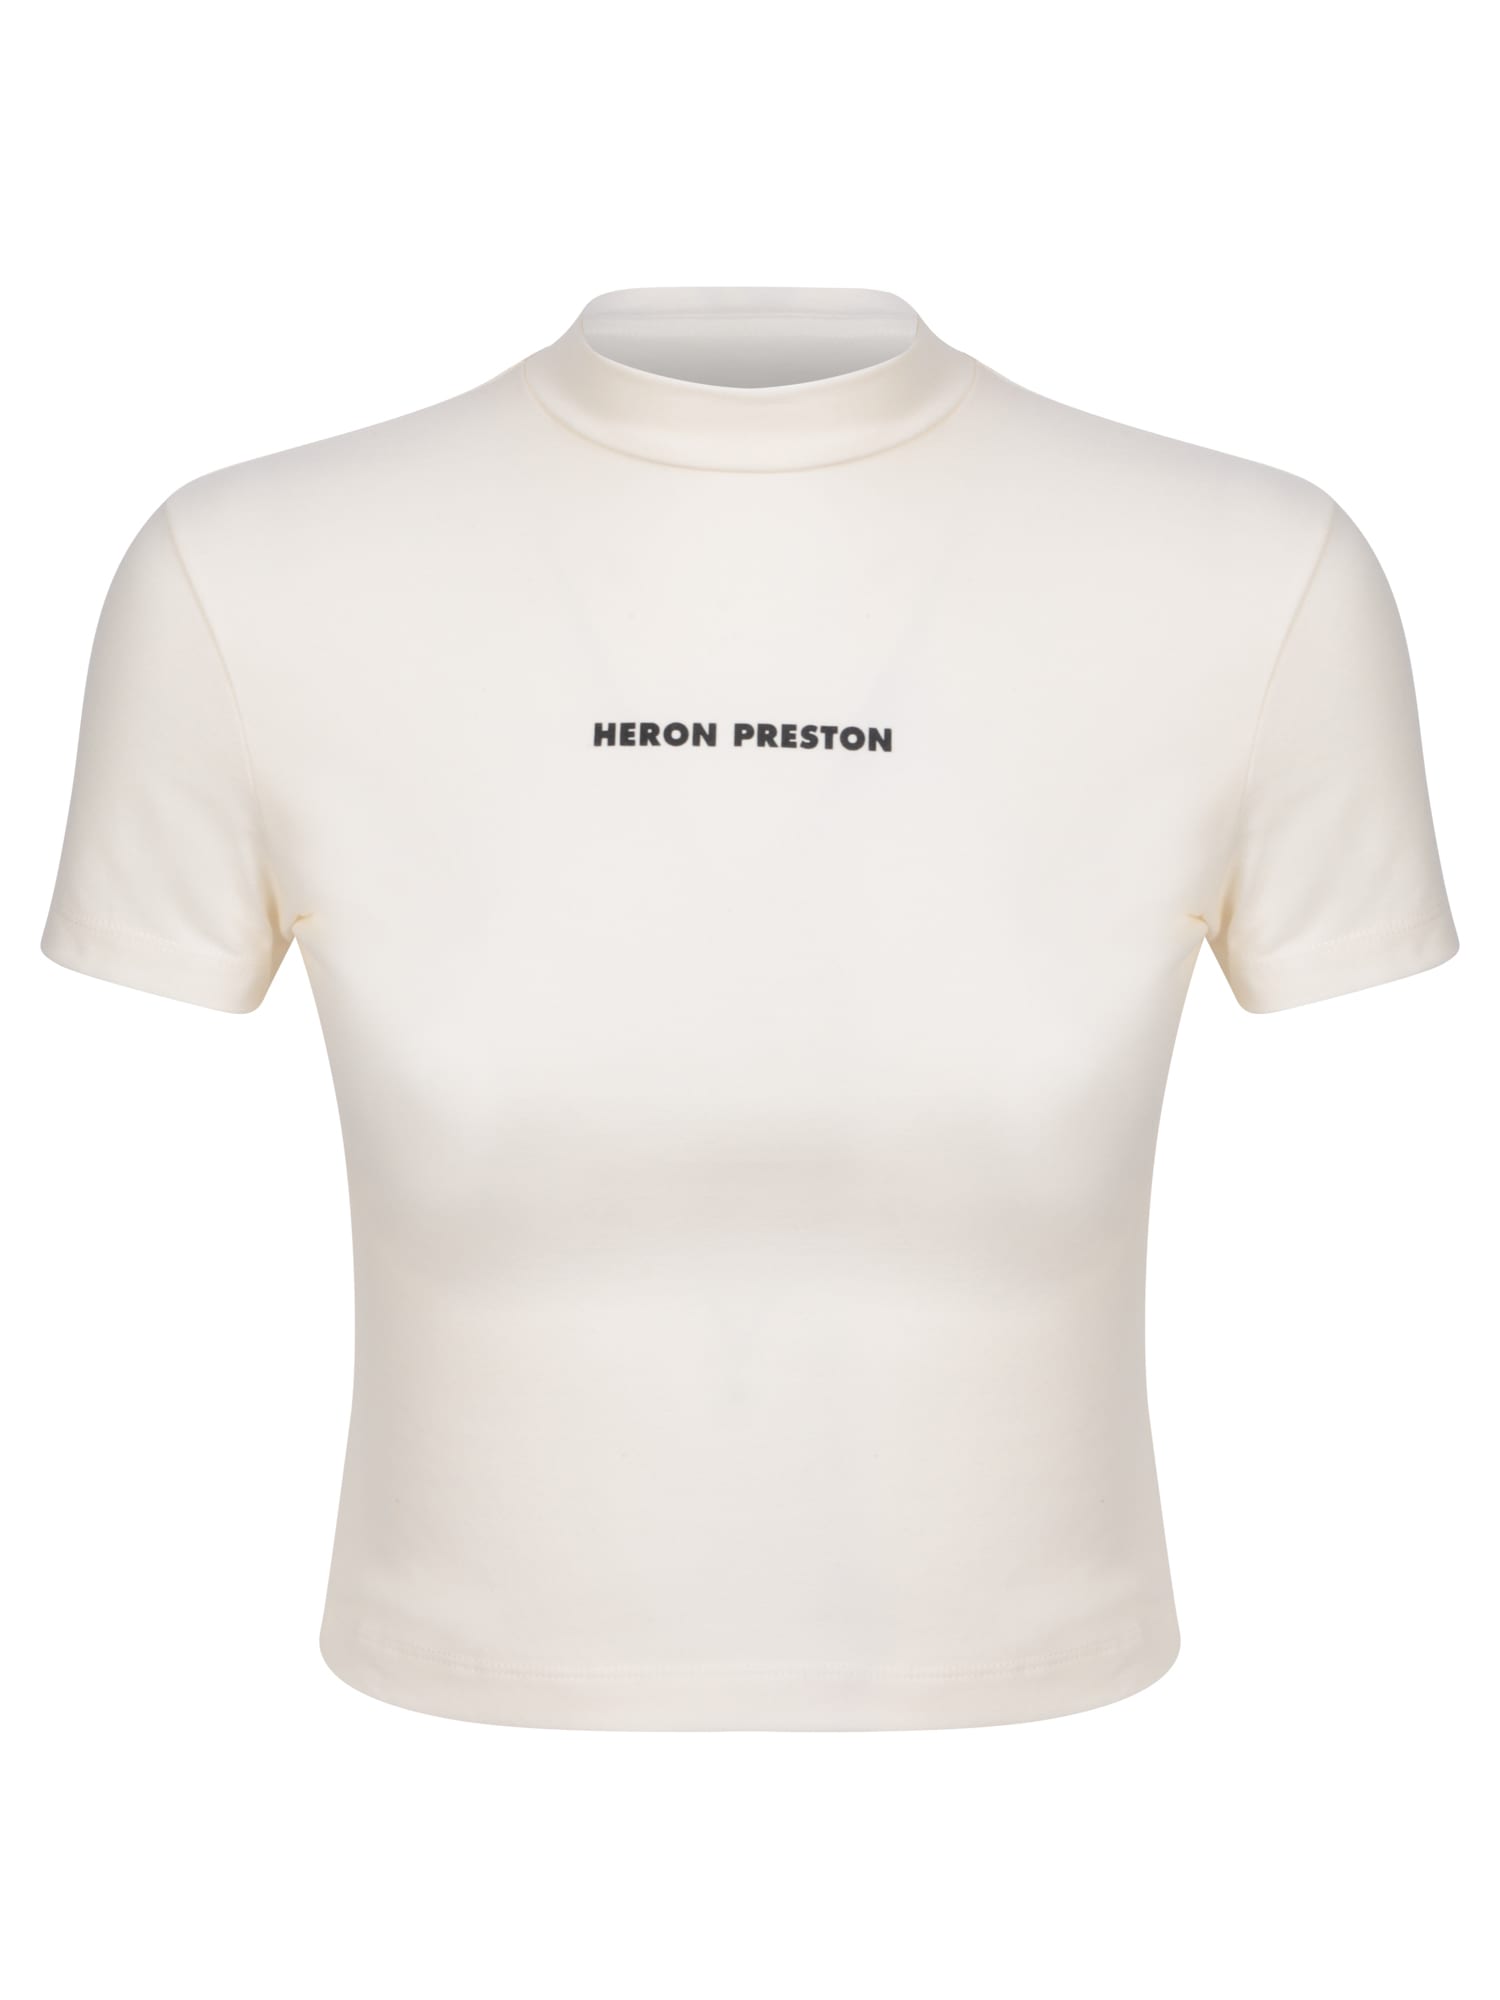 HERON PRESTON Baby White T-shirt